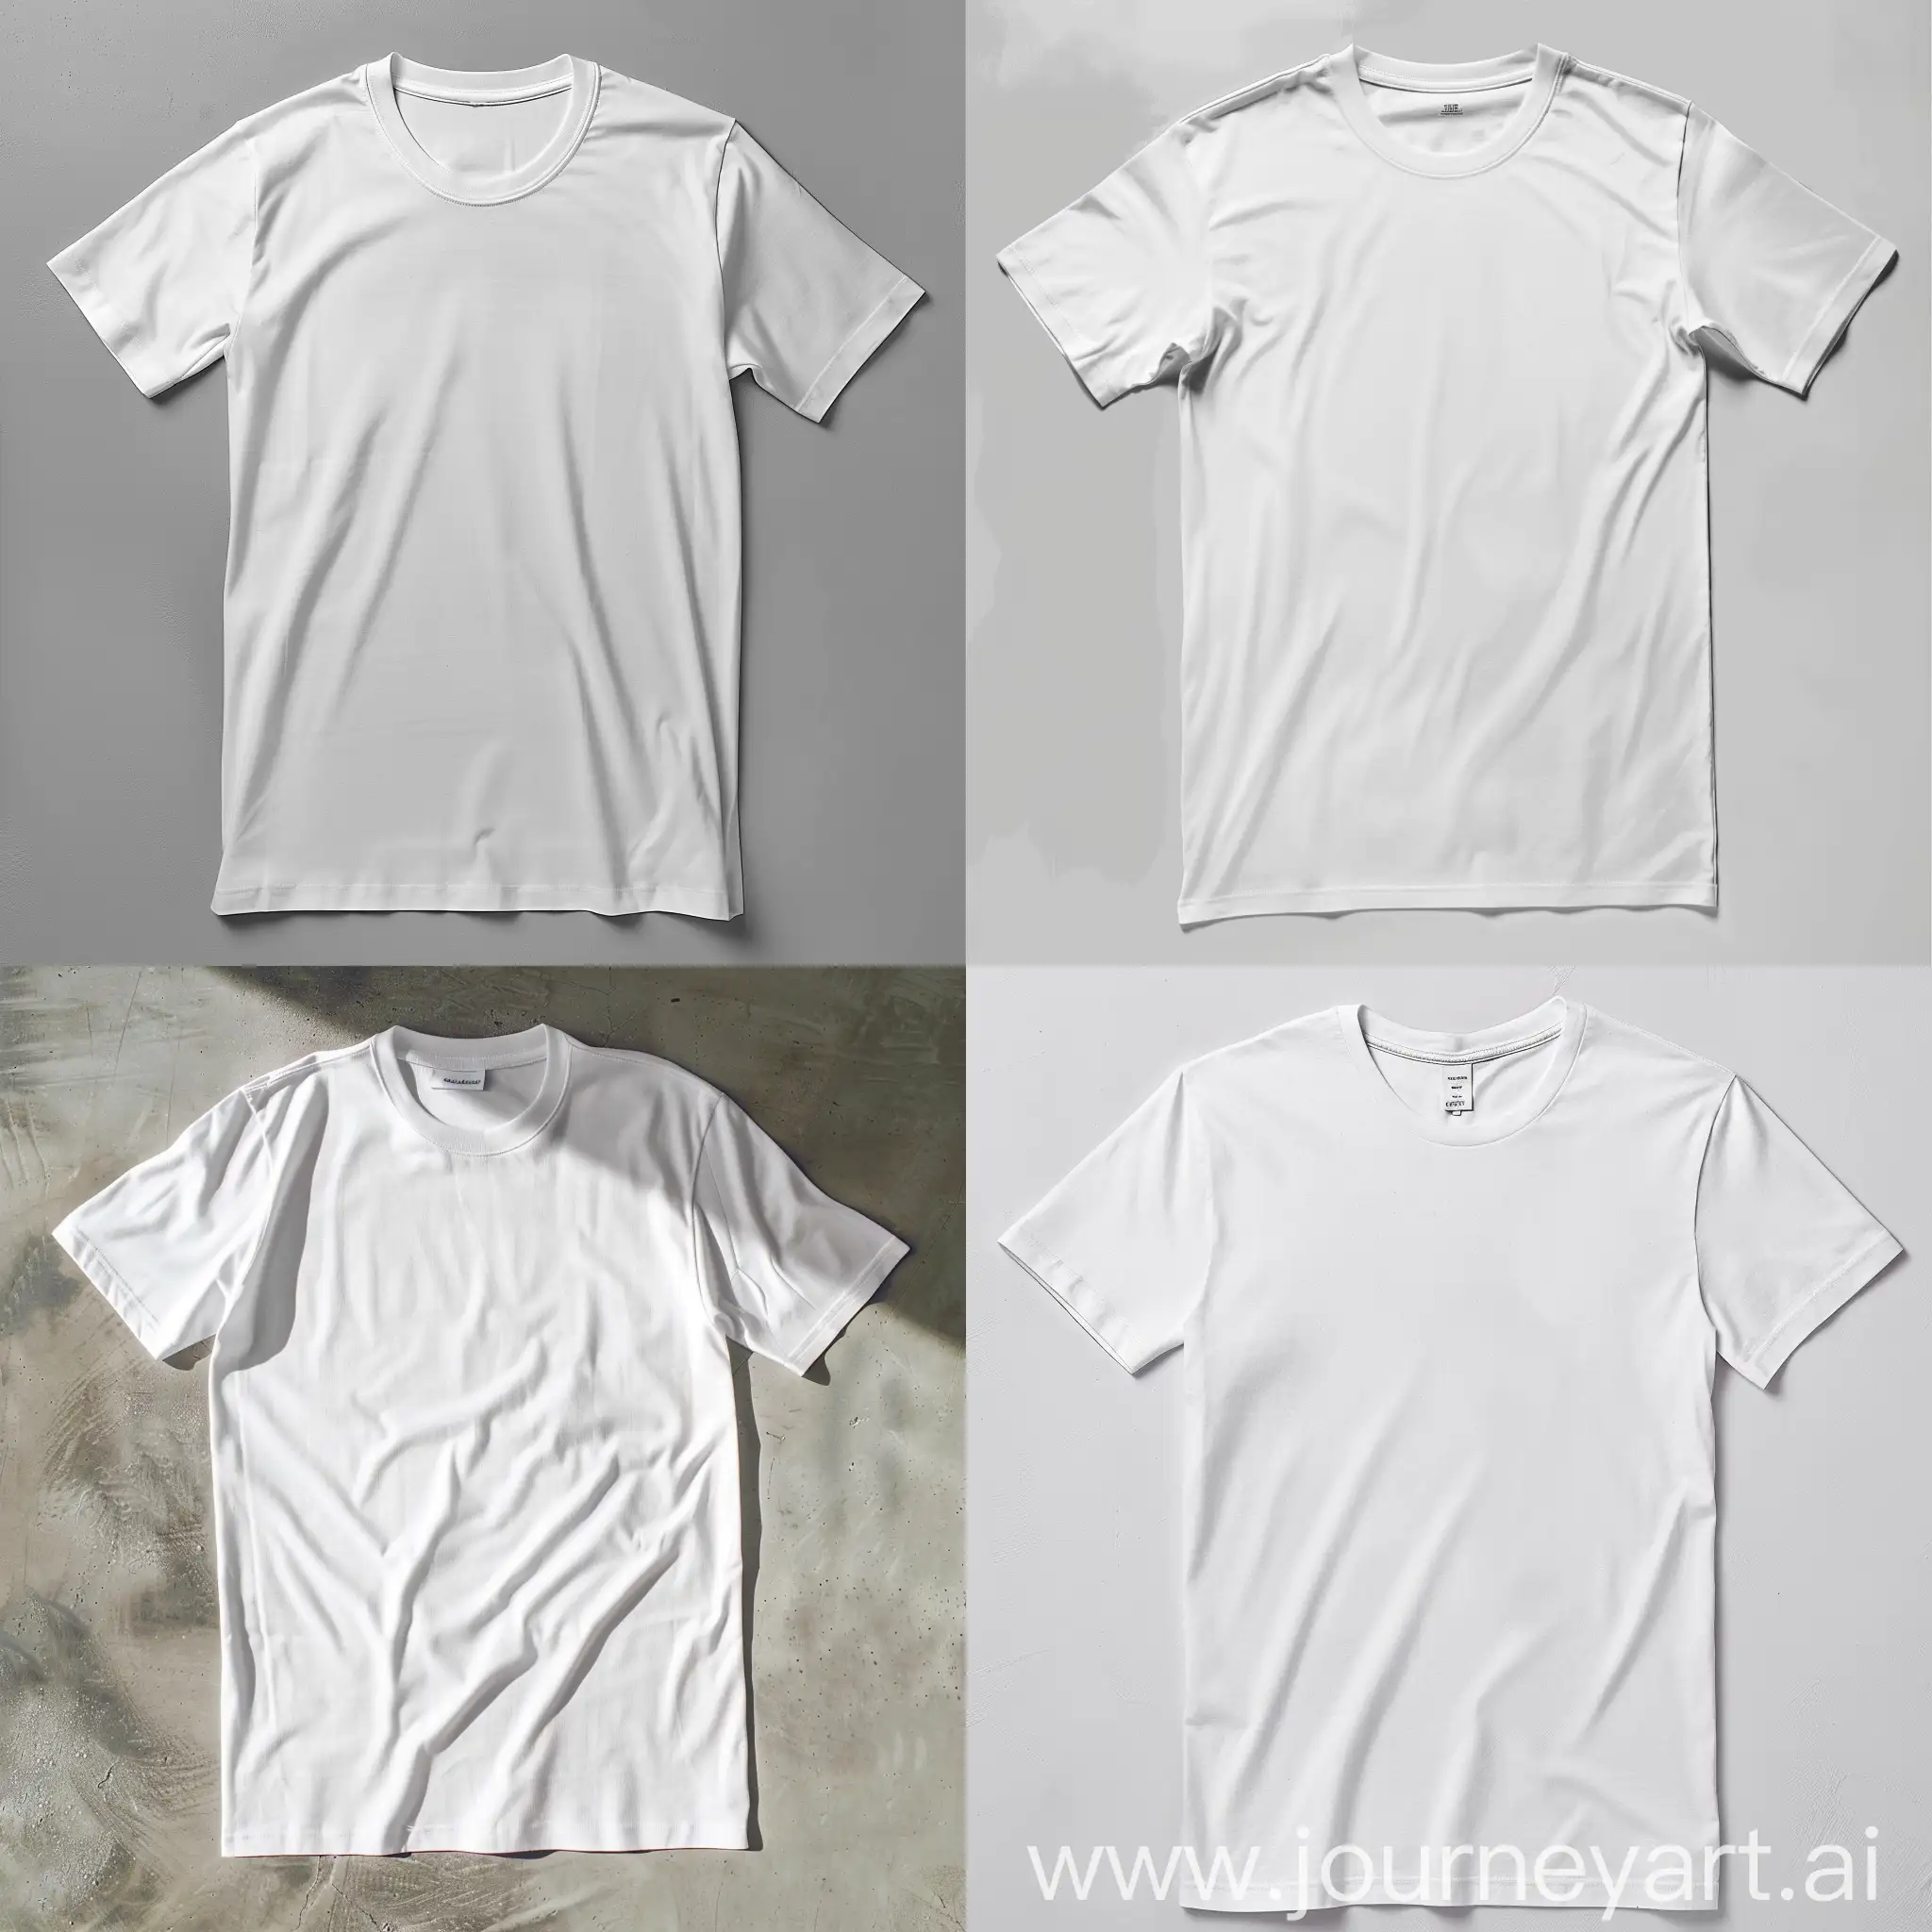 Make a realistic mock up of a white t-shirt (Gildan 5000)